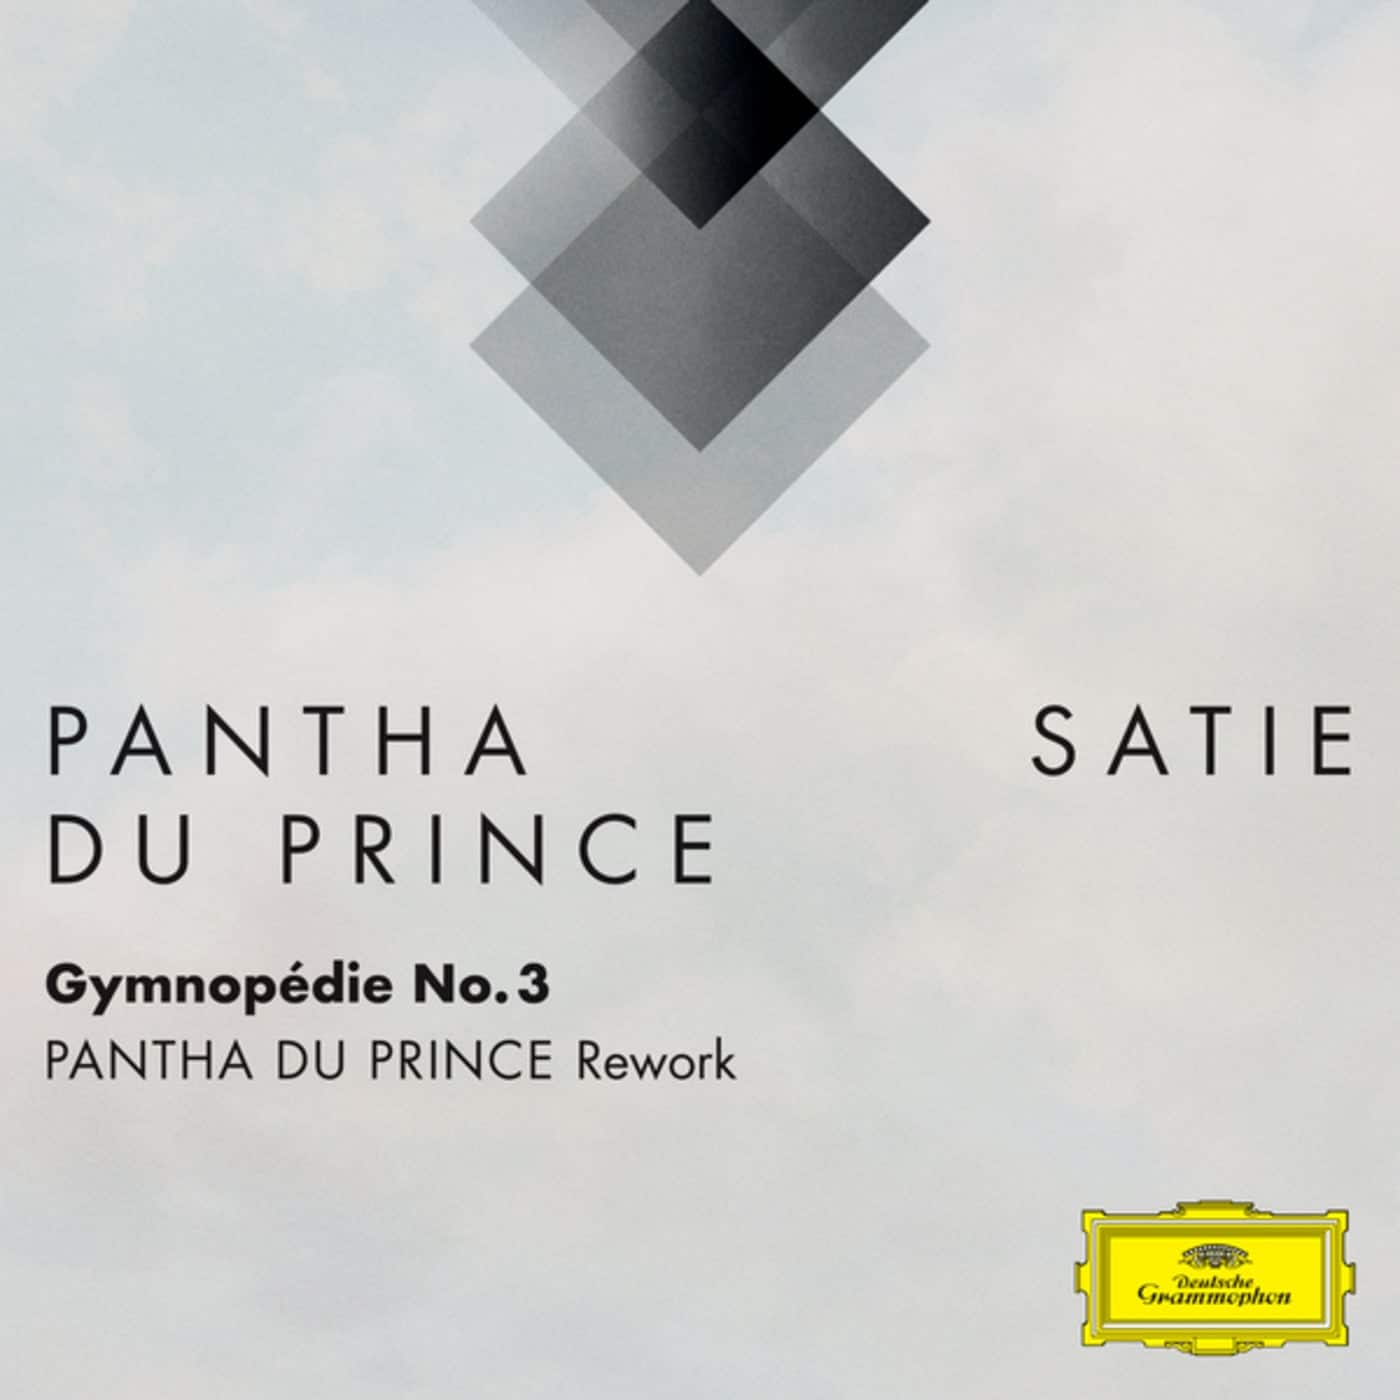 Download Pantha Du Prince - Gymnopédie No. 3 on Electrobuzz